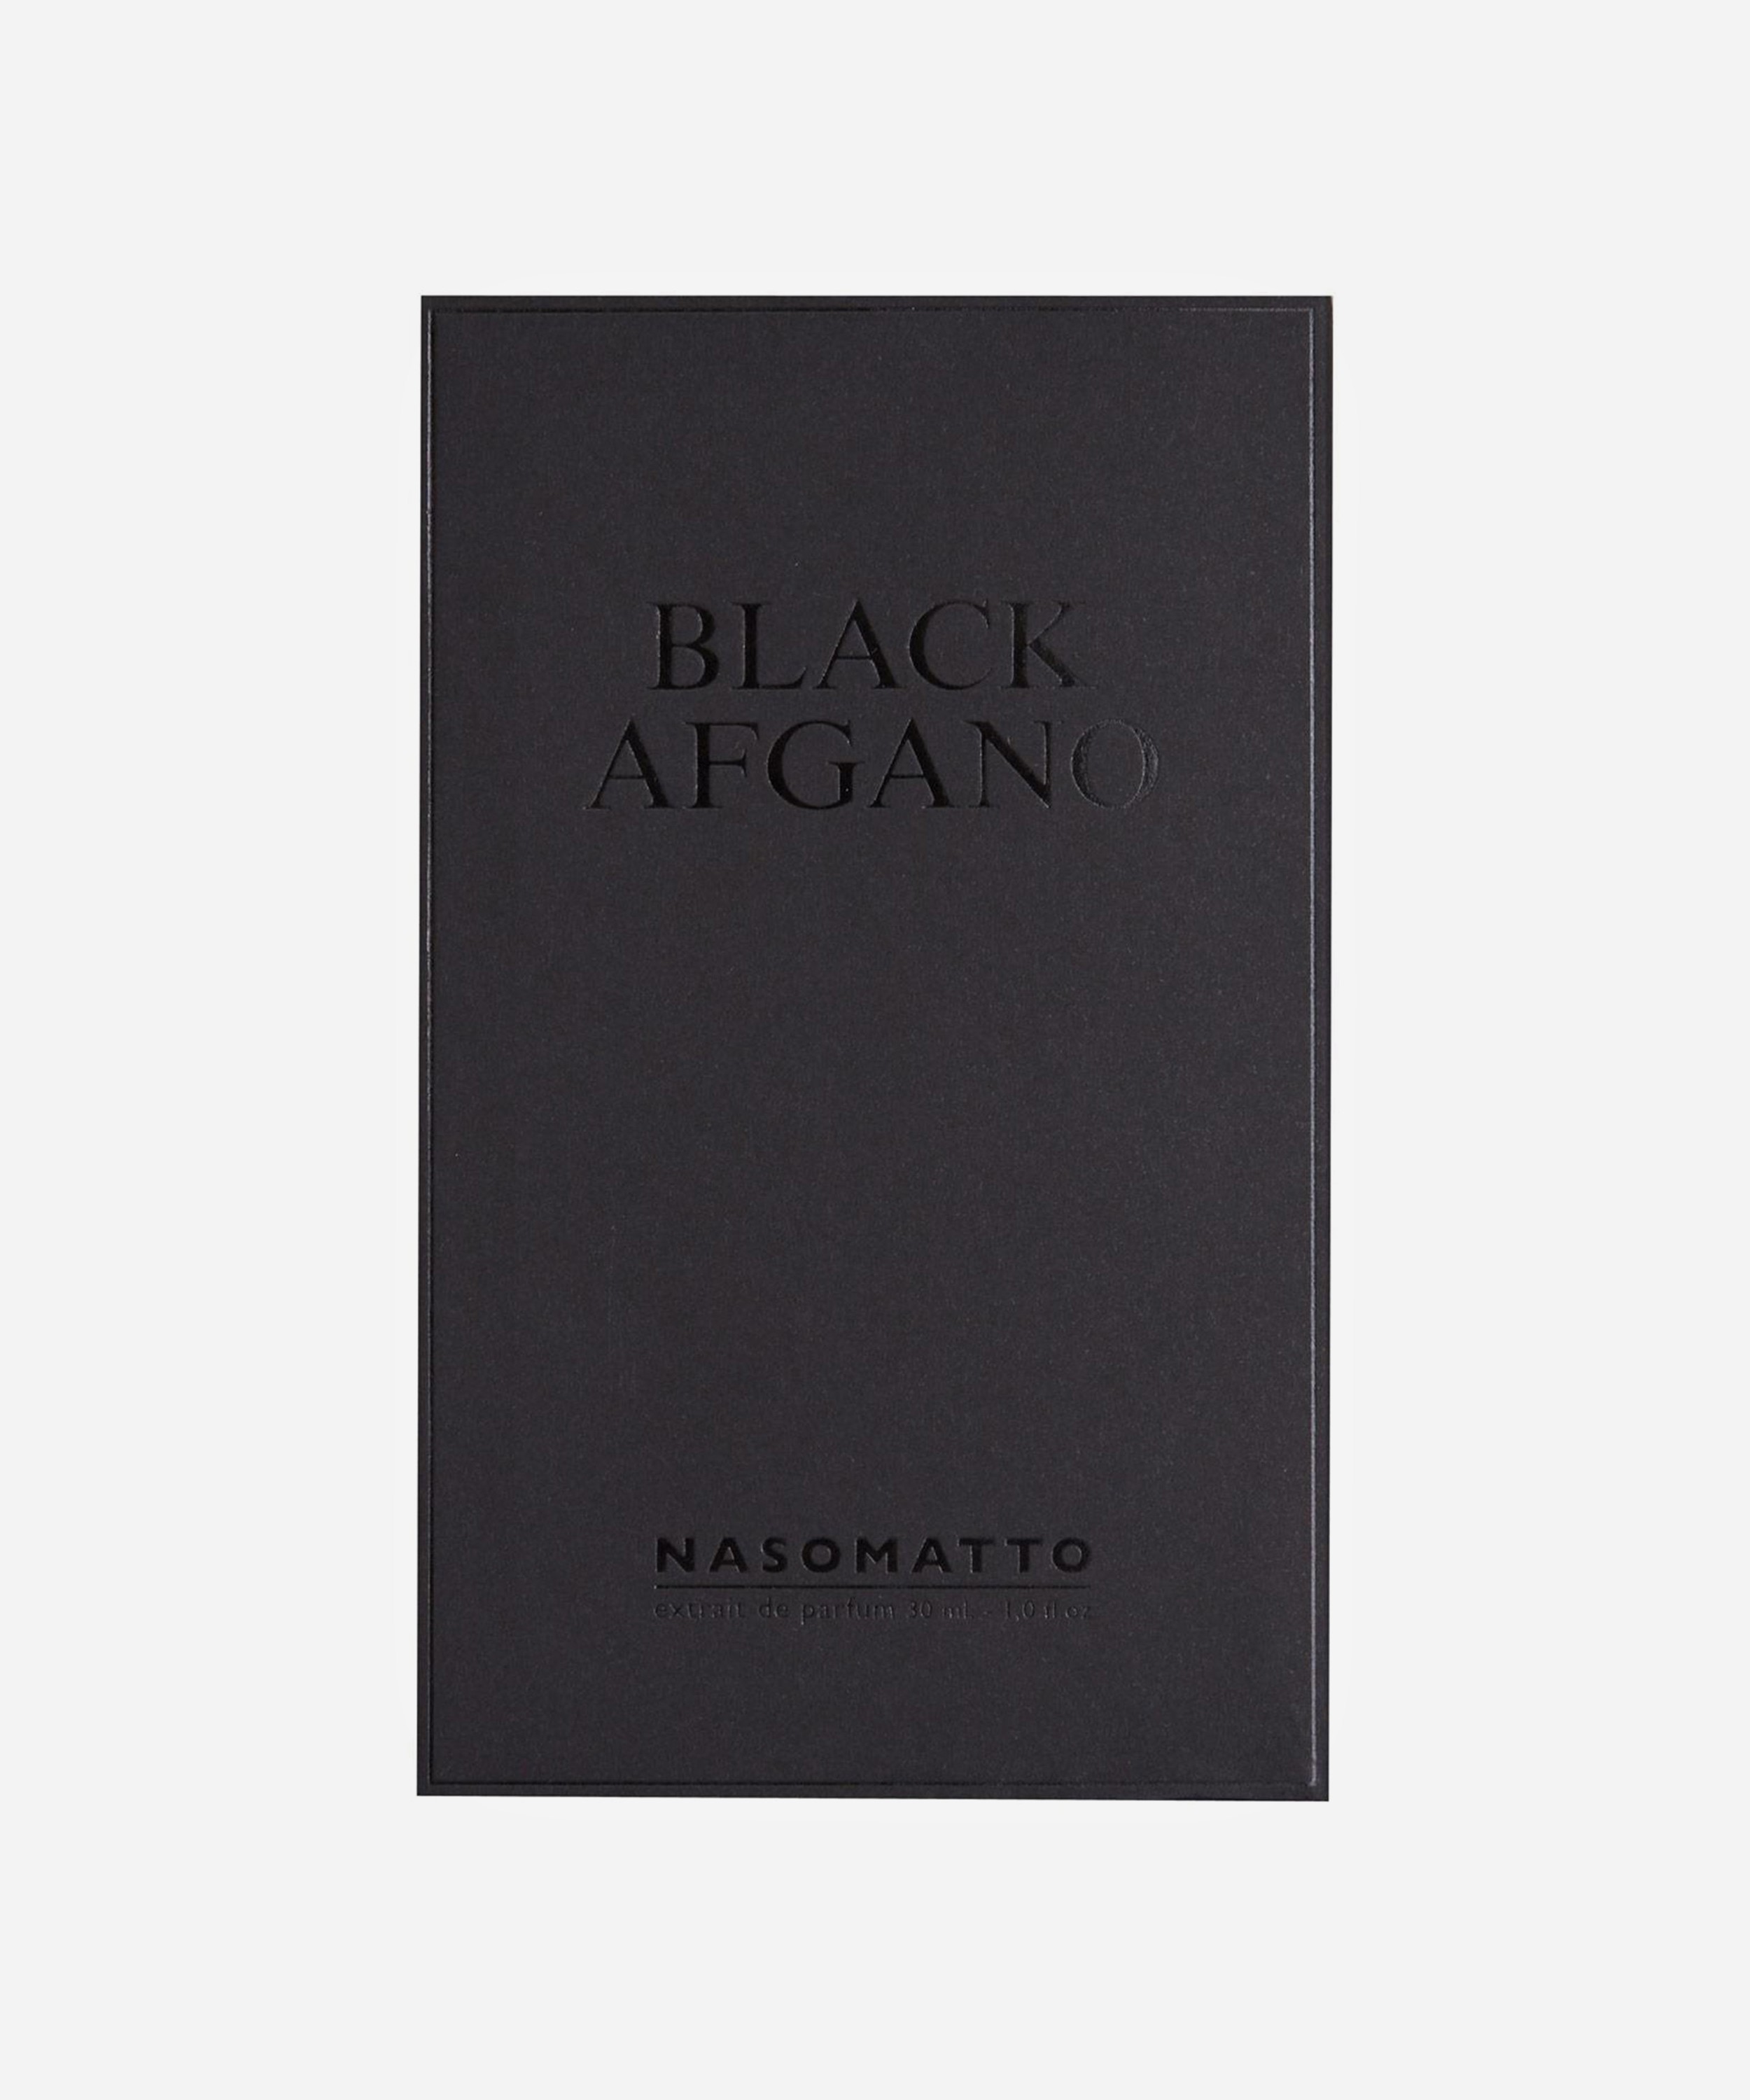 Nasomatto Black Afgano Extrait de Parfum 30ml | Liberty